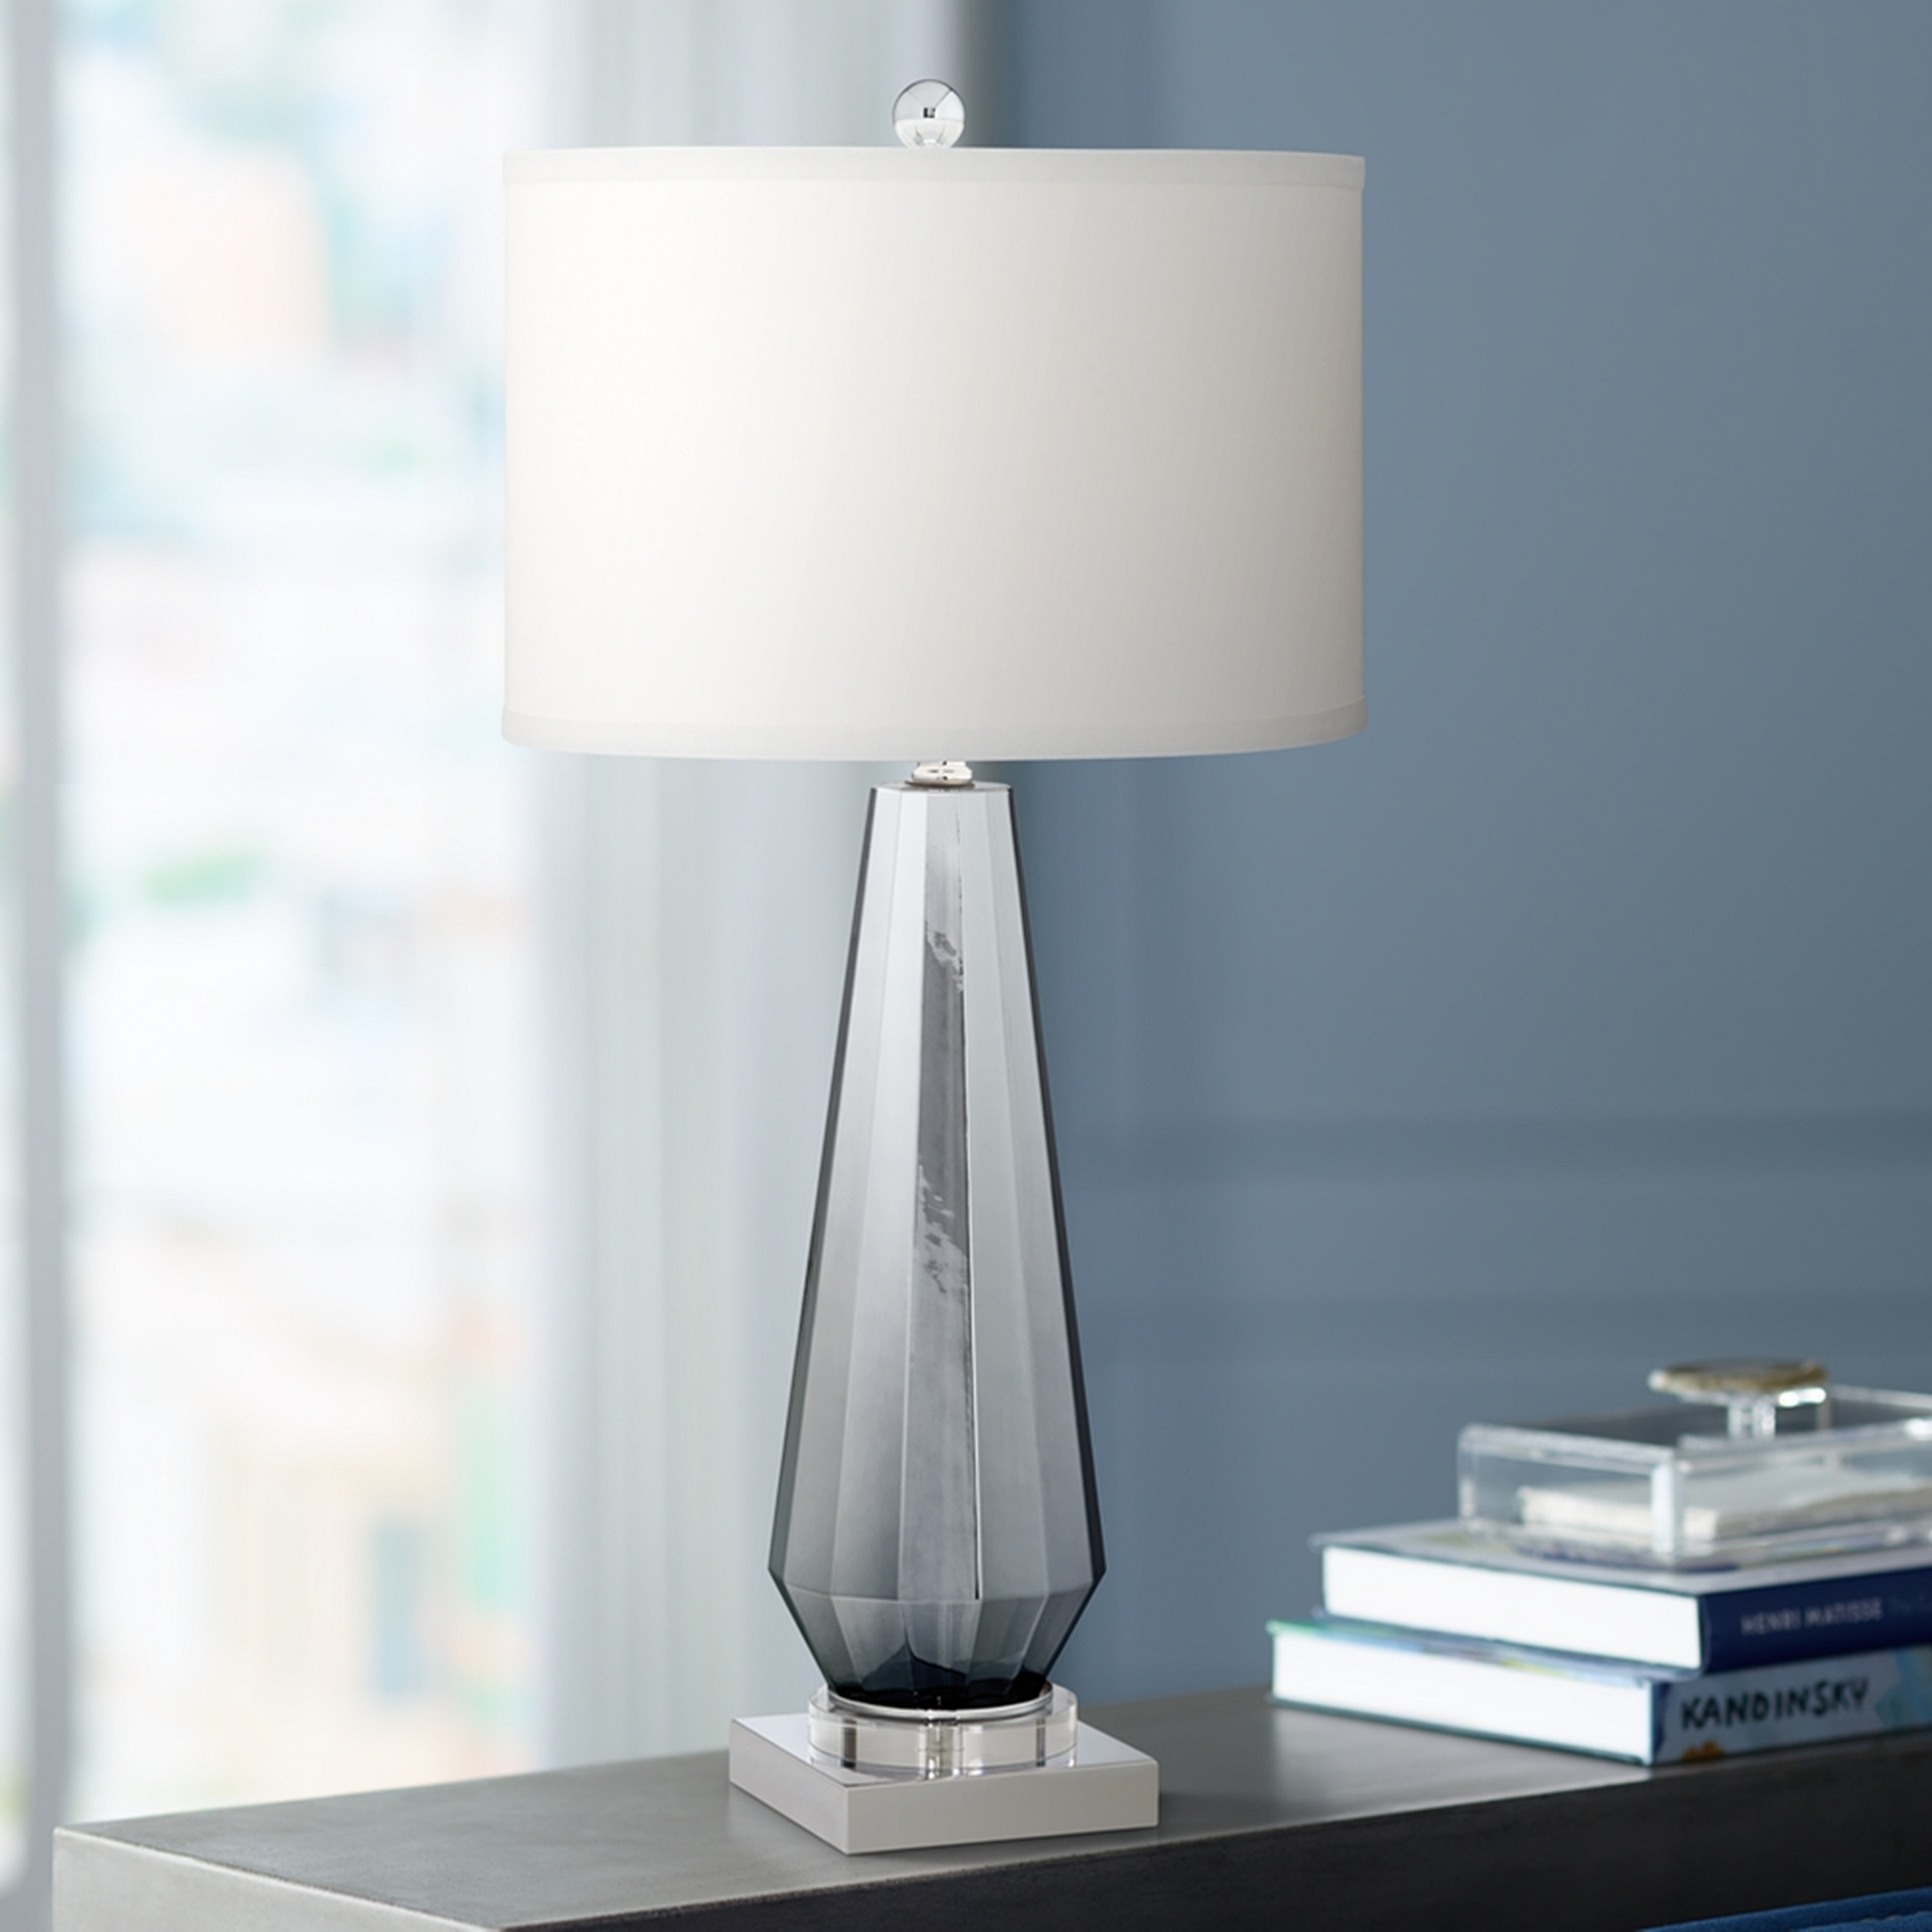 Charcoal Topaz Chrome Table Lamp - Style # 43D64 - Lamps Plus